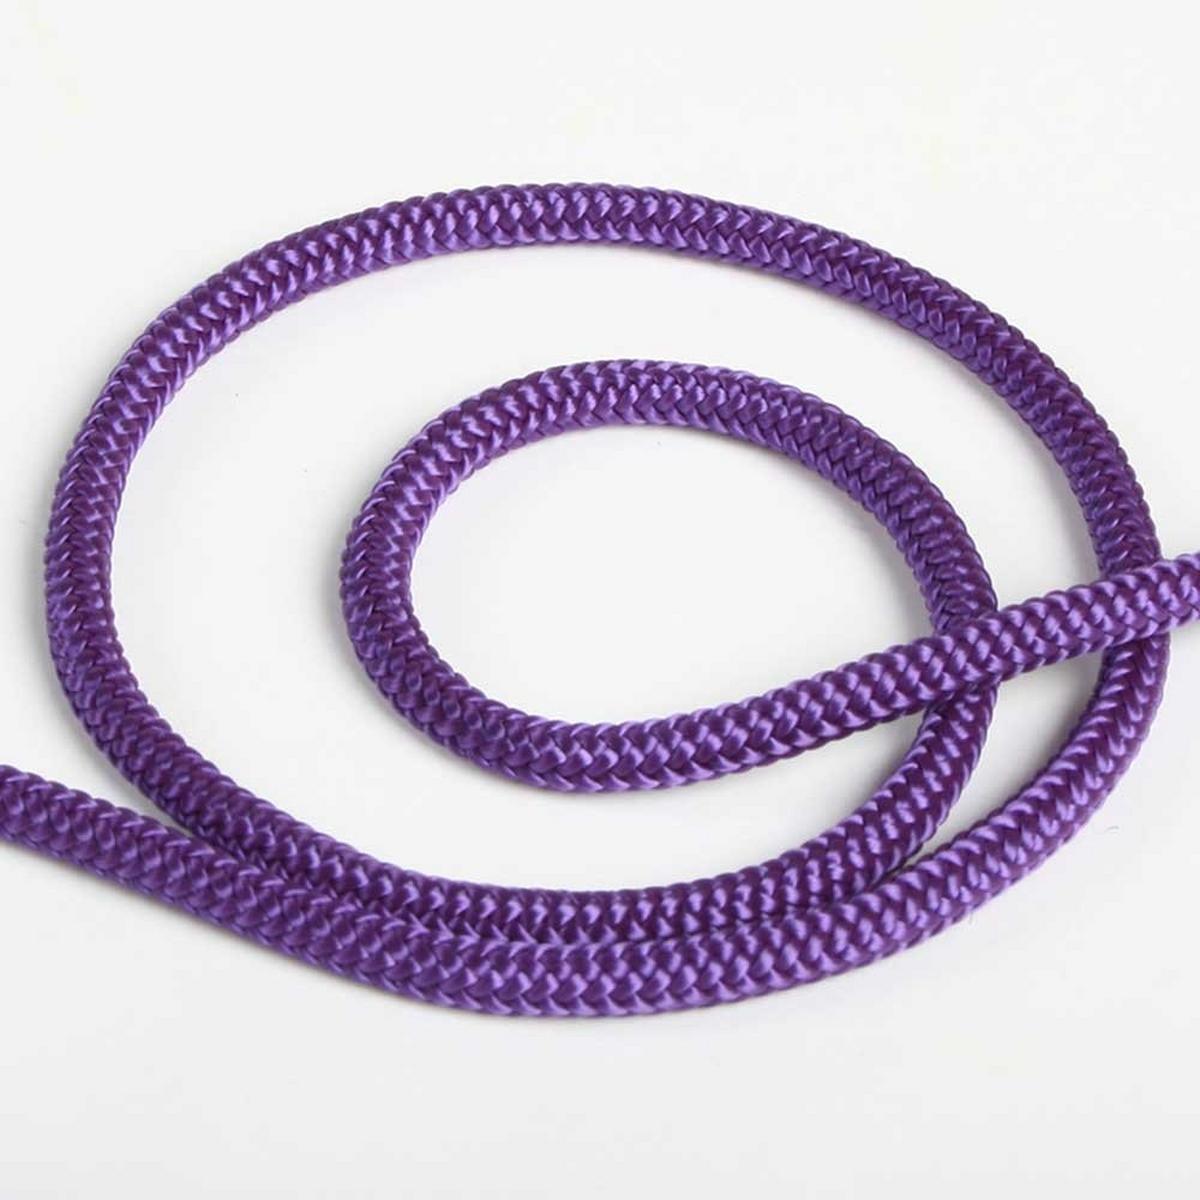 Edelweis 4mm x 10m Rope - Purple